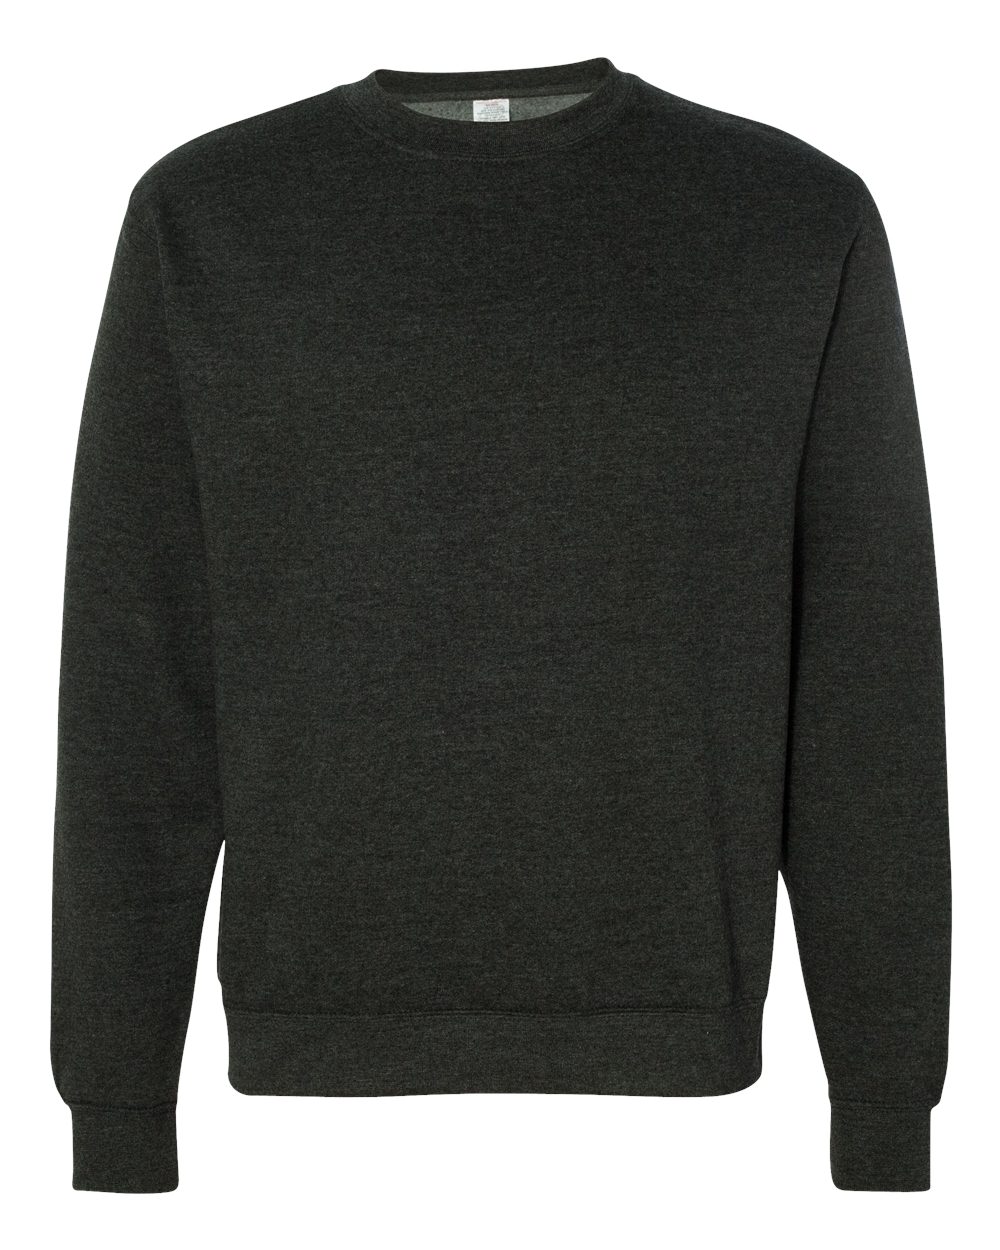 Download Independent Trading Co. SS3000 Crewneck Sweatshirt | eBay